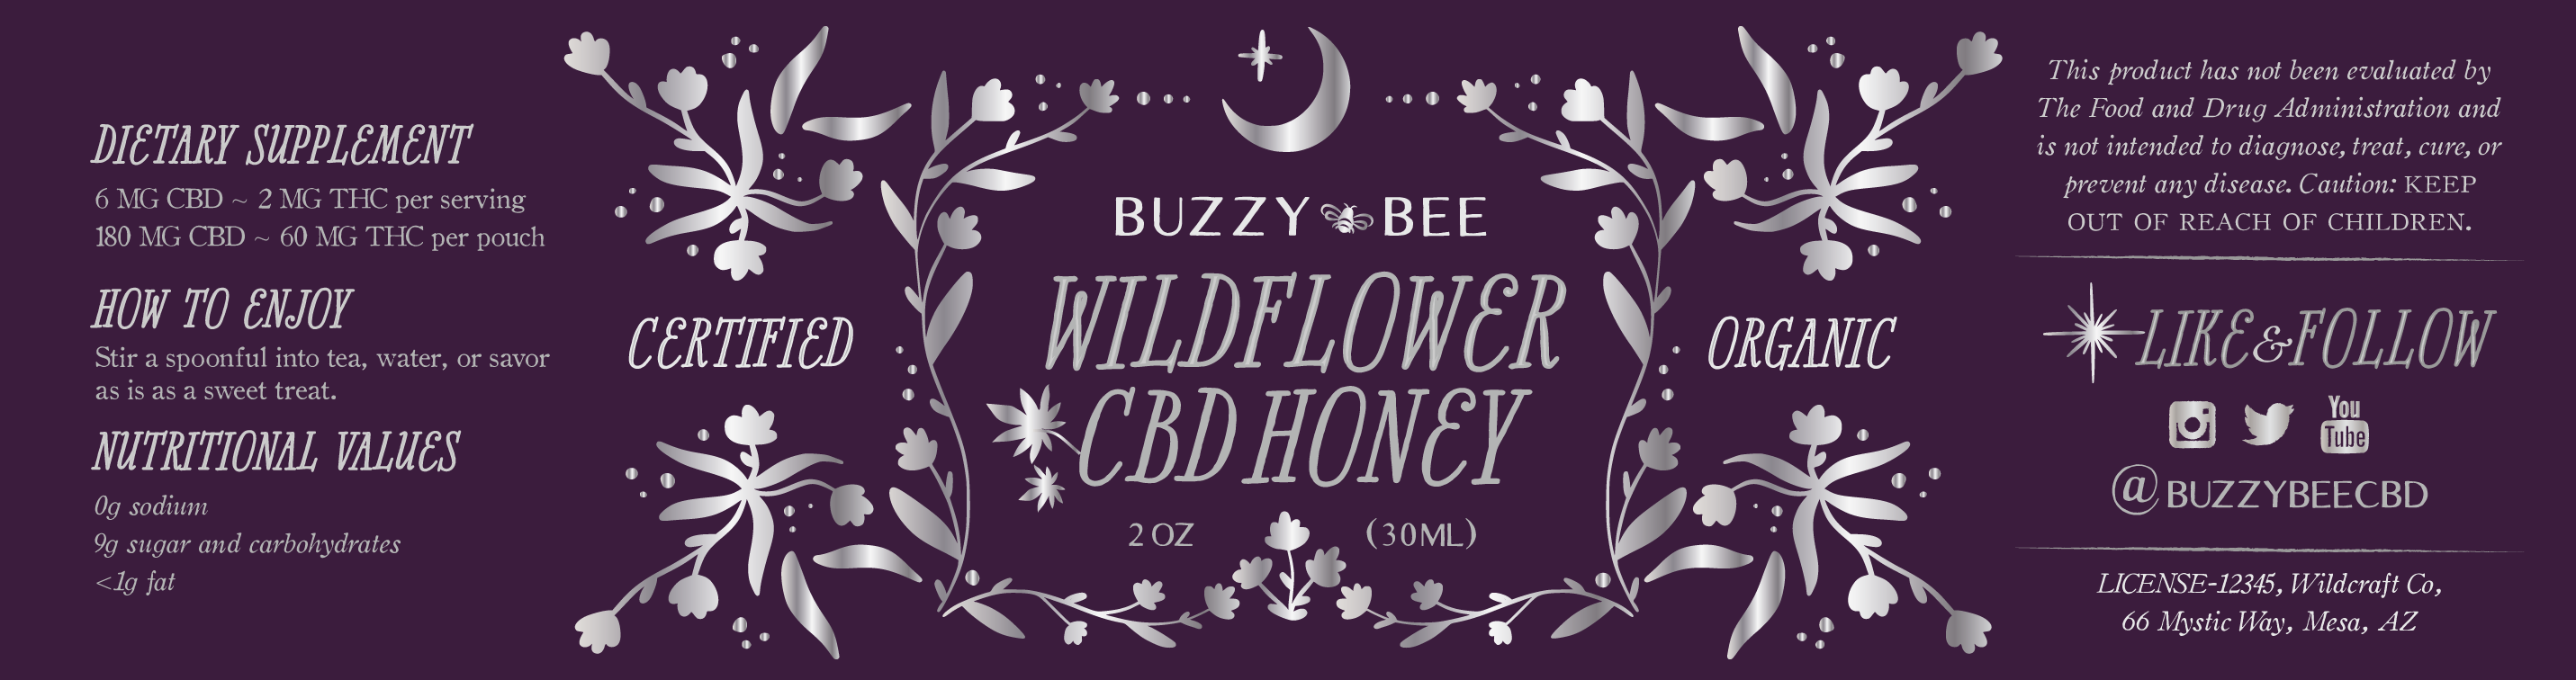 CBD product label custom design for honey custom label design